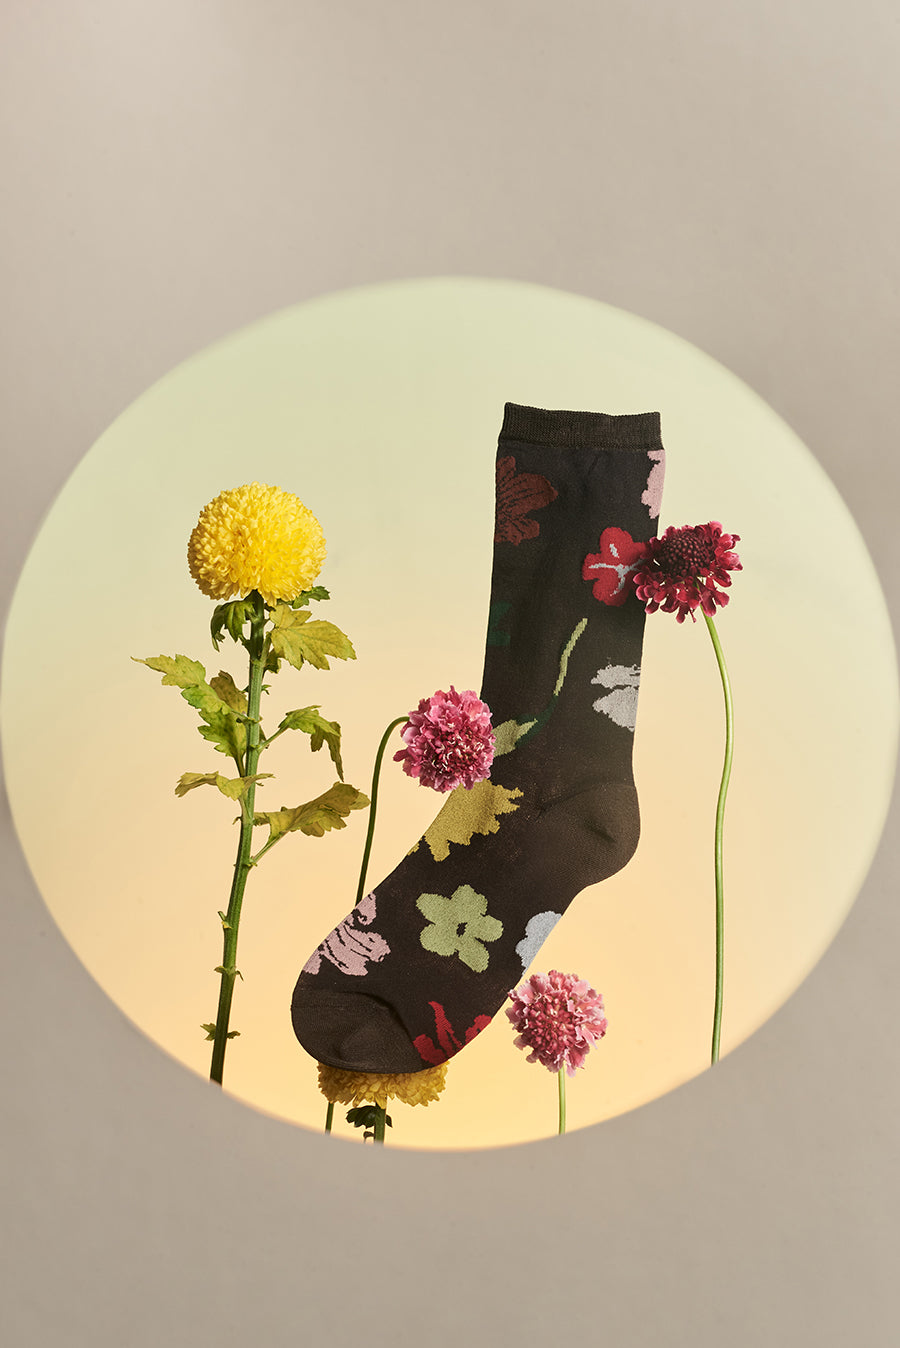 Socks / JNBY Floral Prints Mid-calf Socks